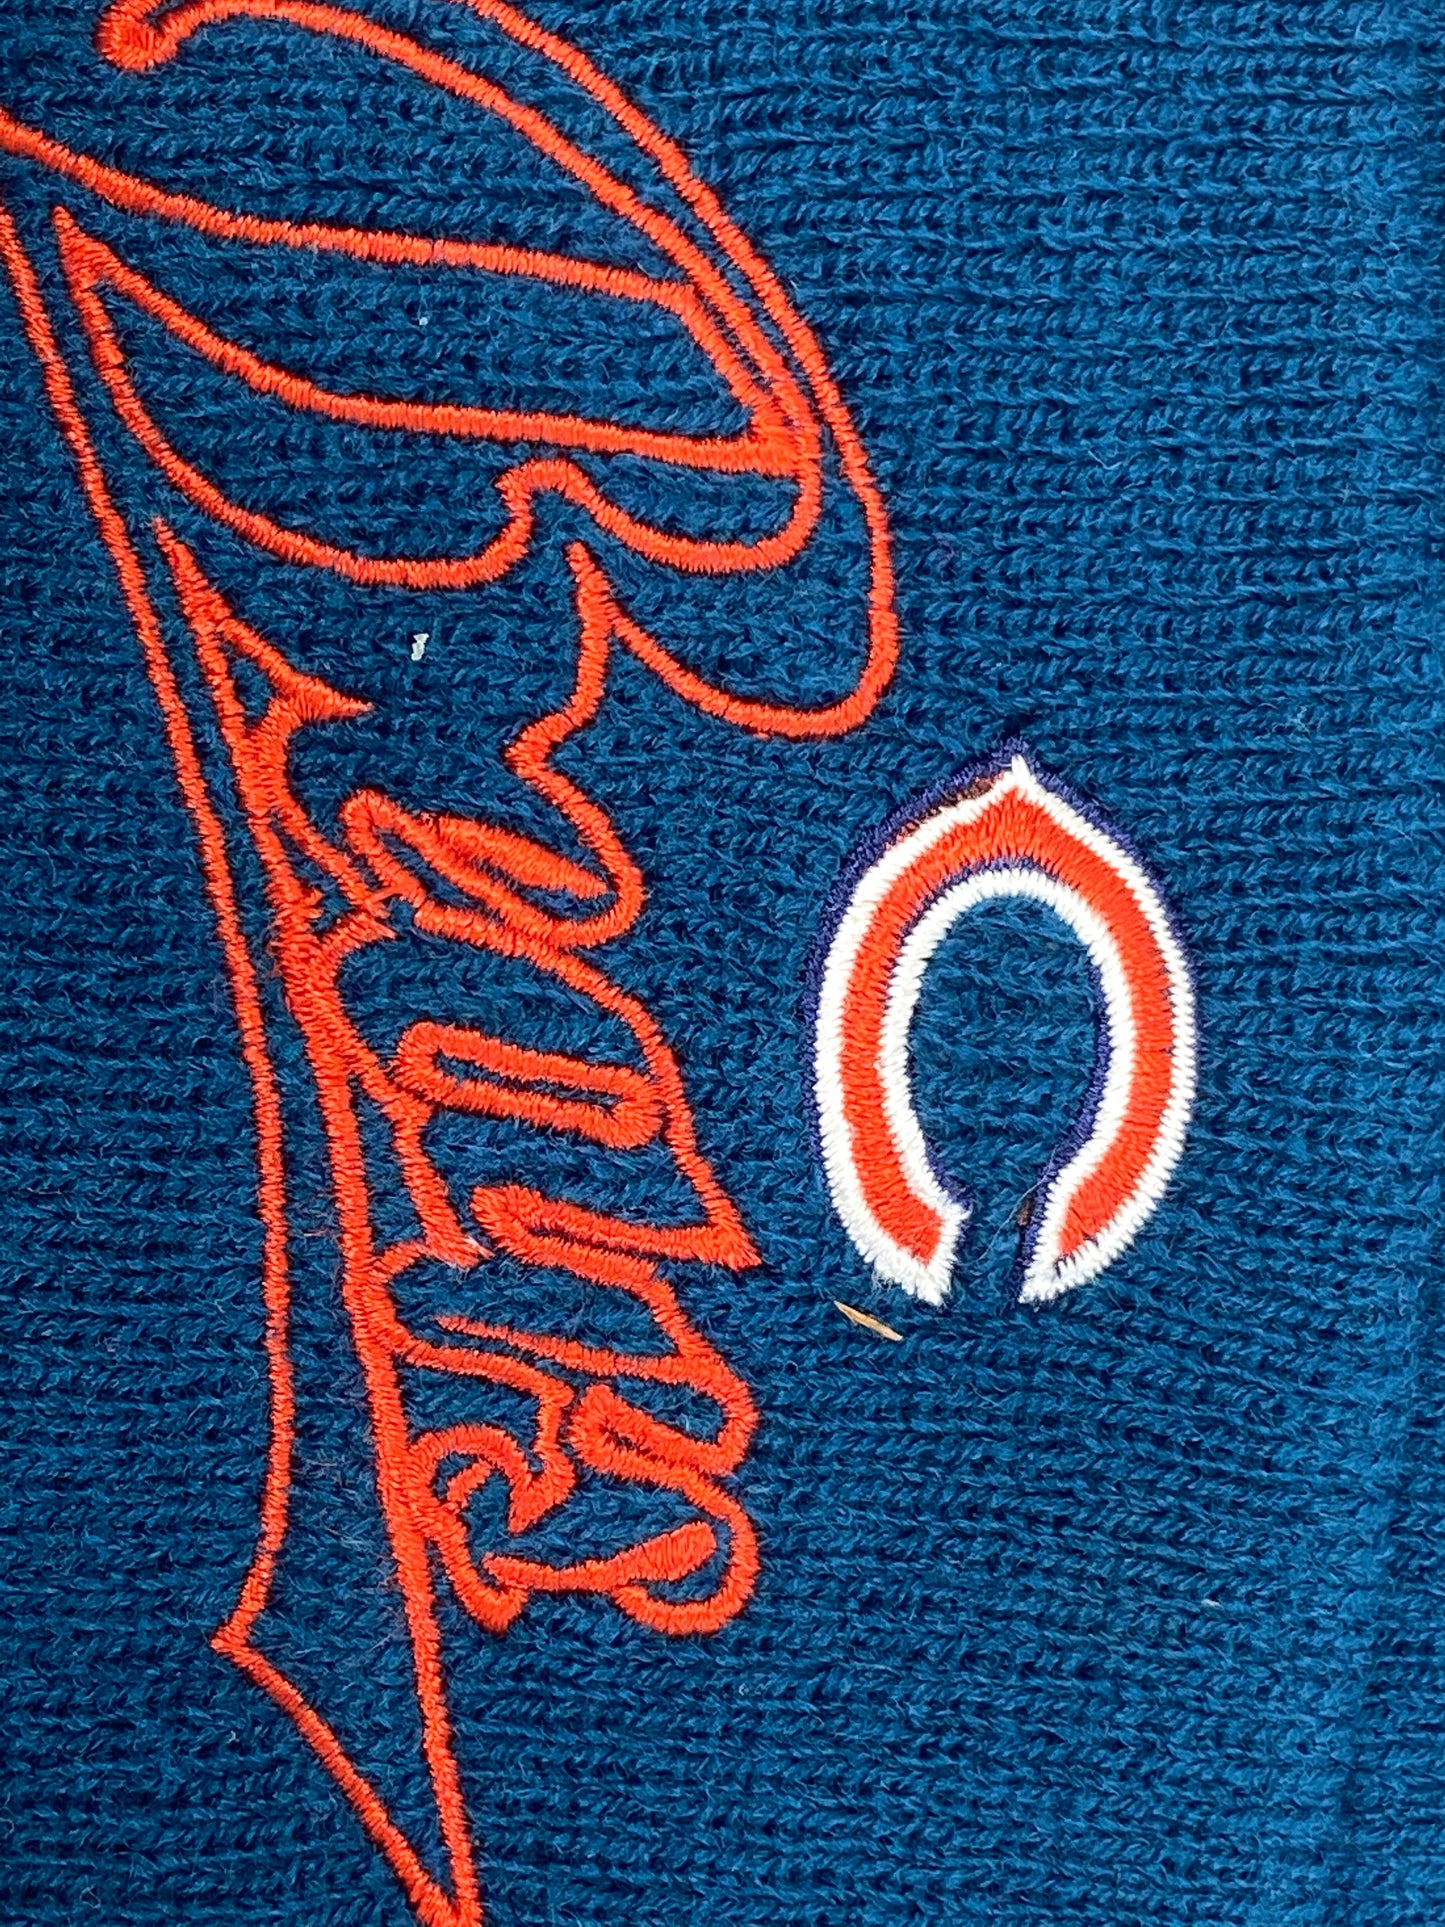 Chicago Bears Vintage NFL Cuffed Knit Logo Hat by Drew Pearson Marketing